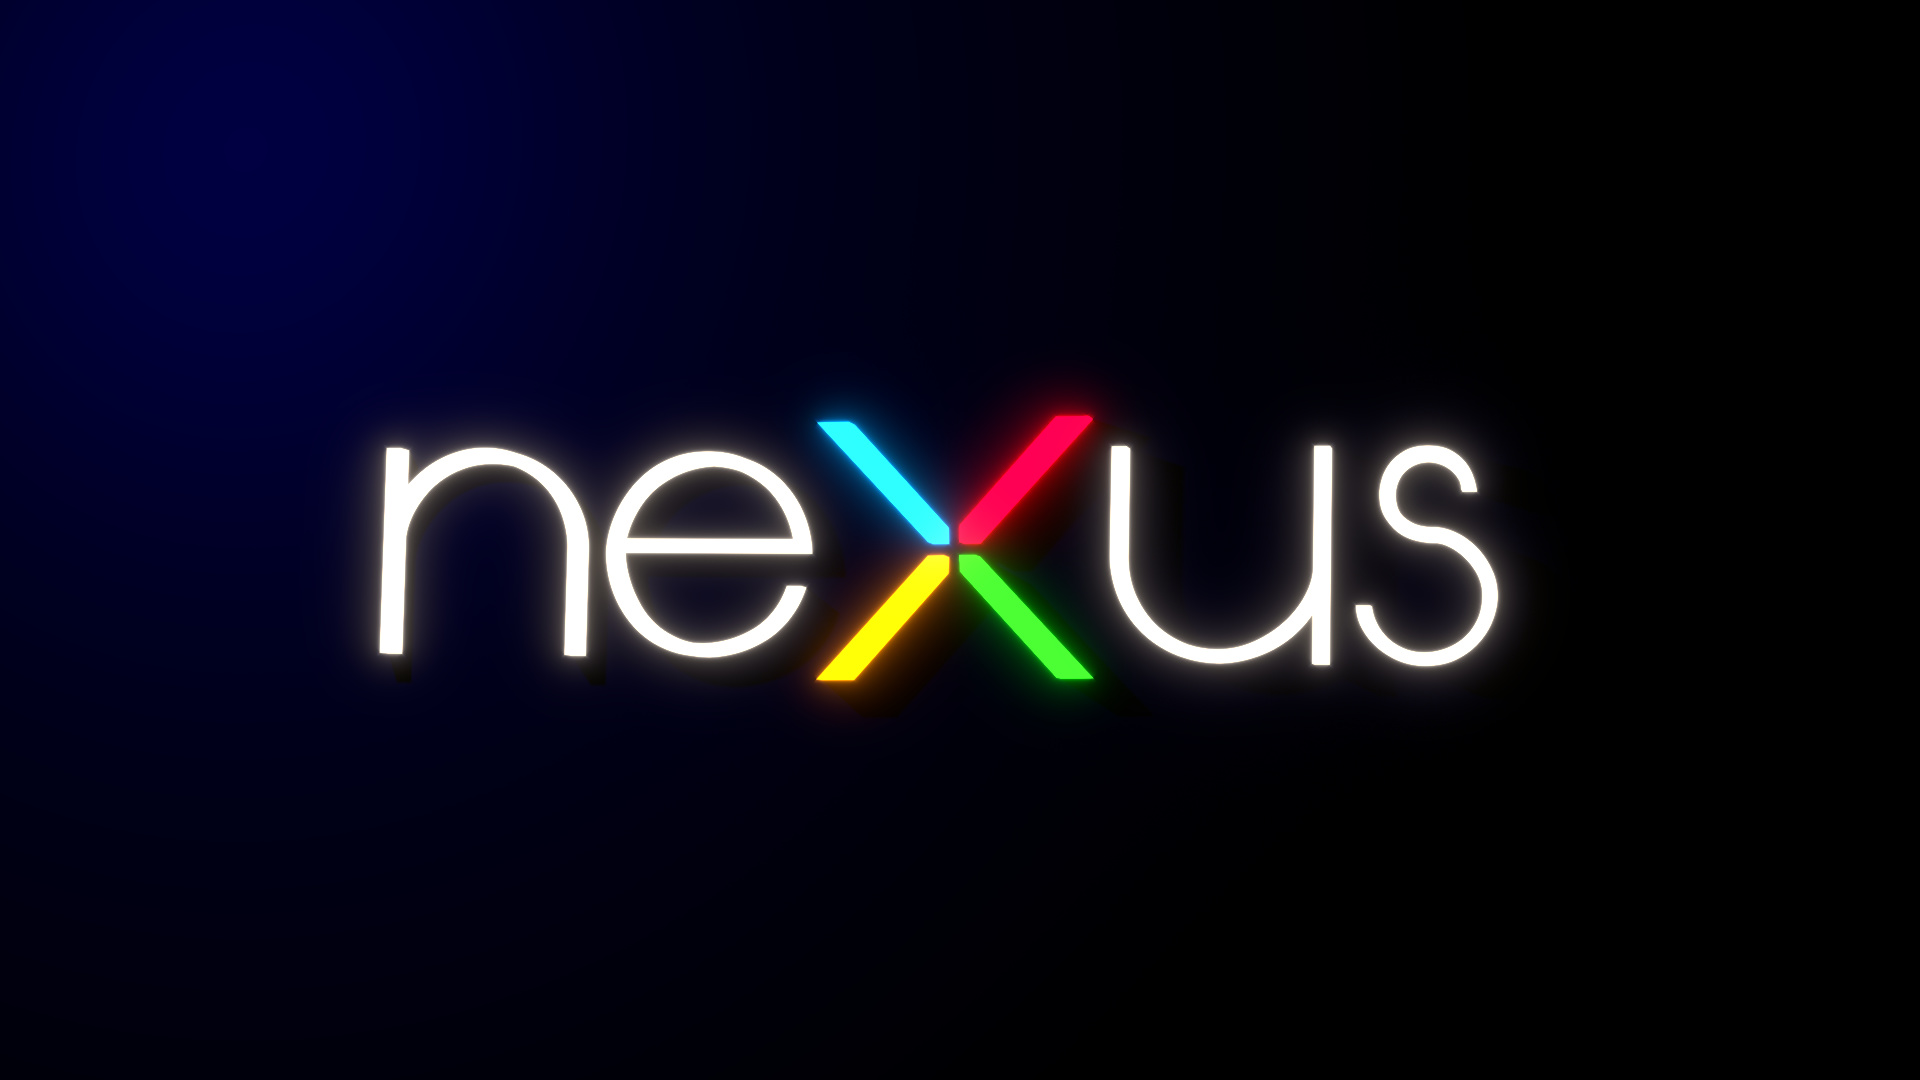 Nexus - Logo by Mansu on Dribbble